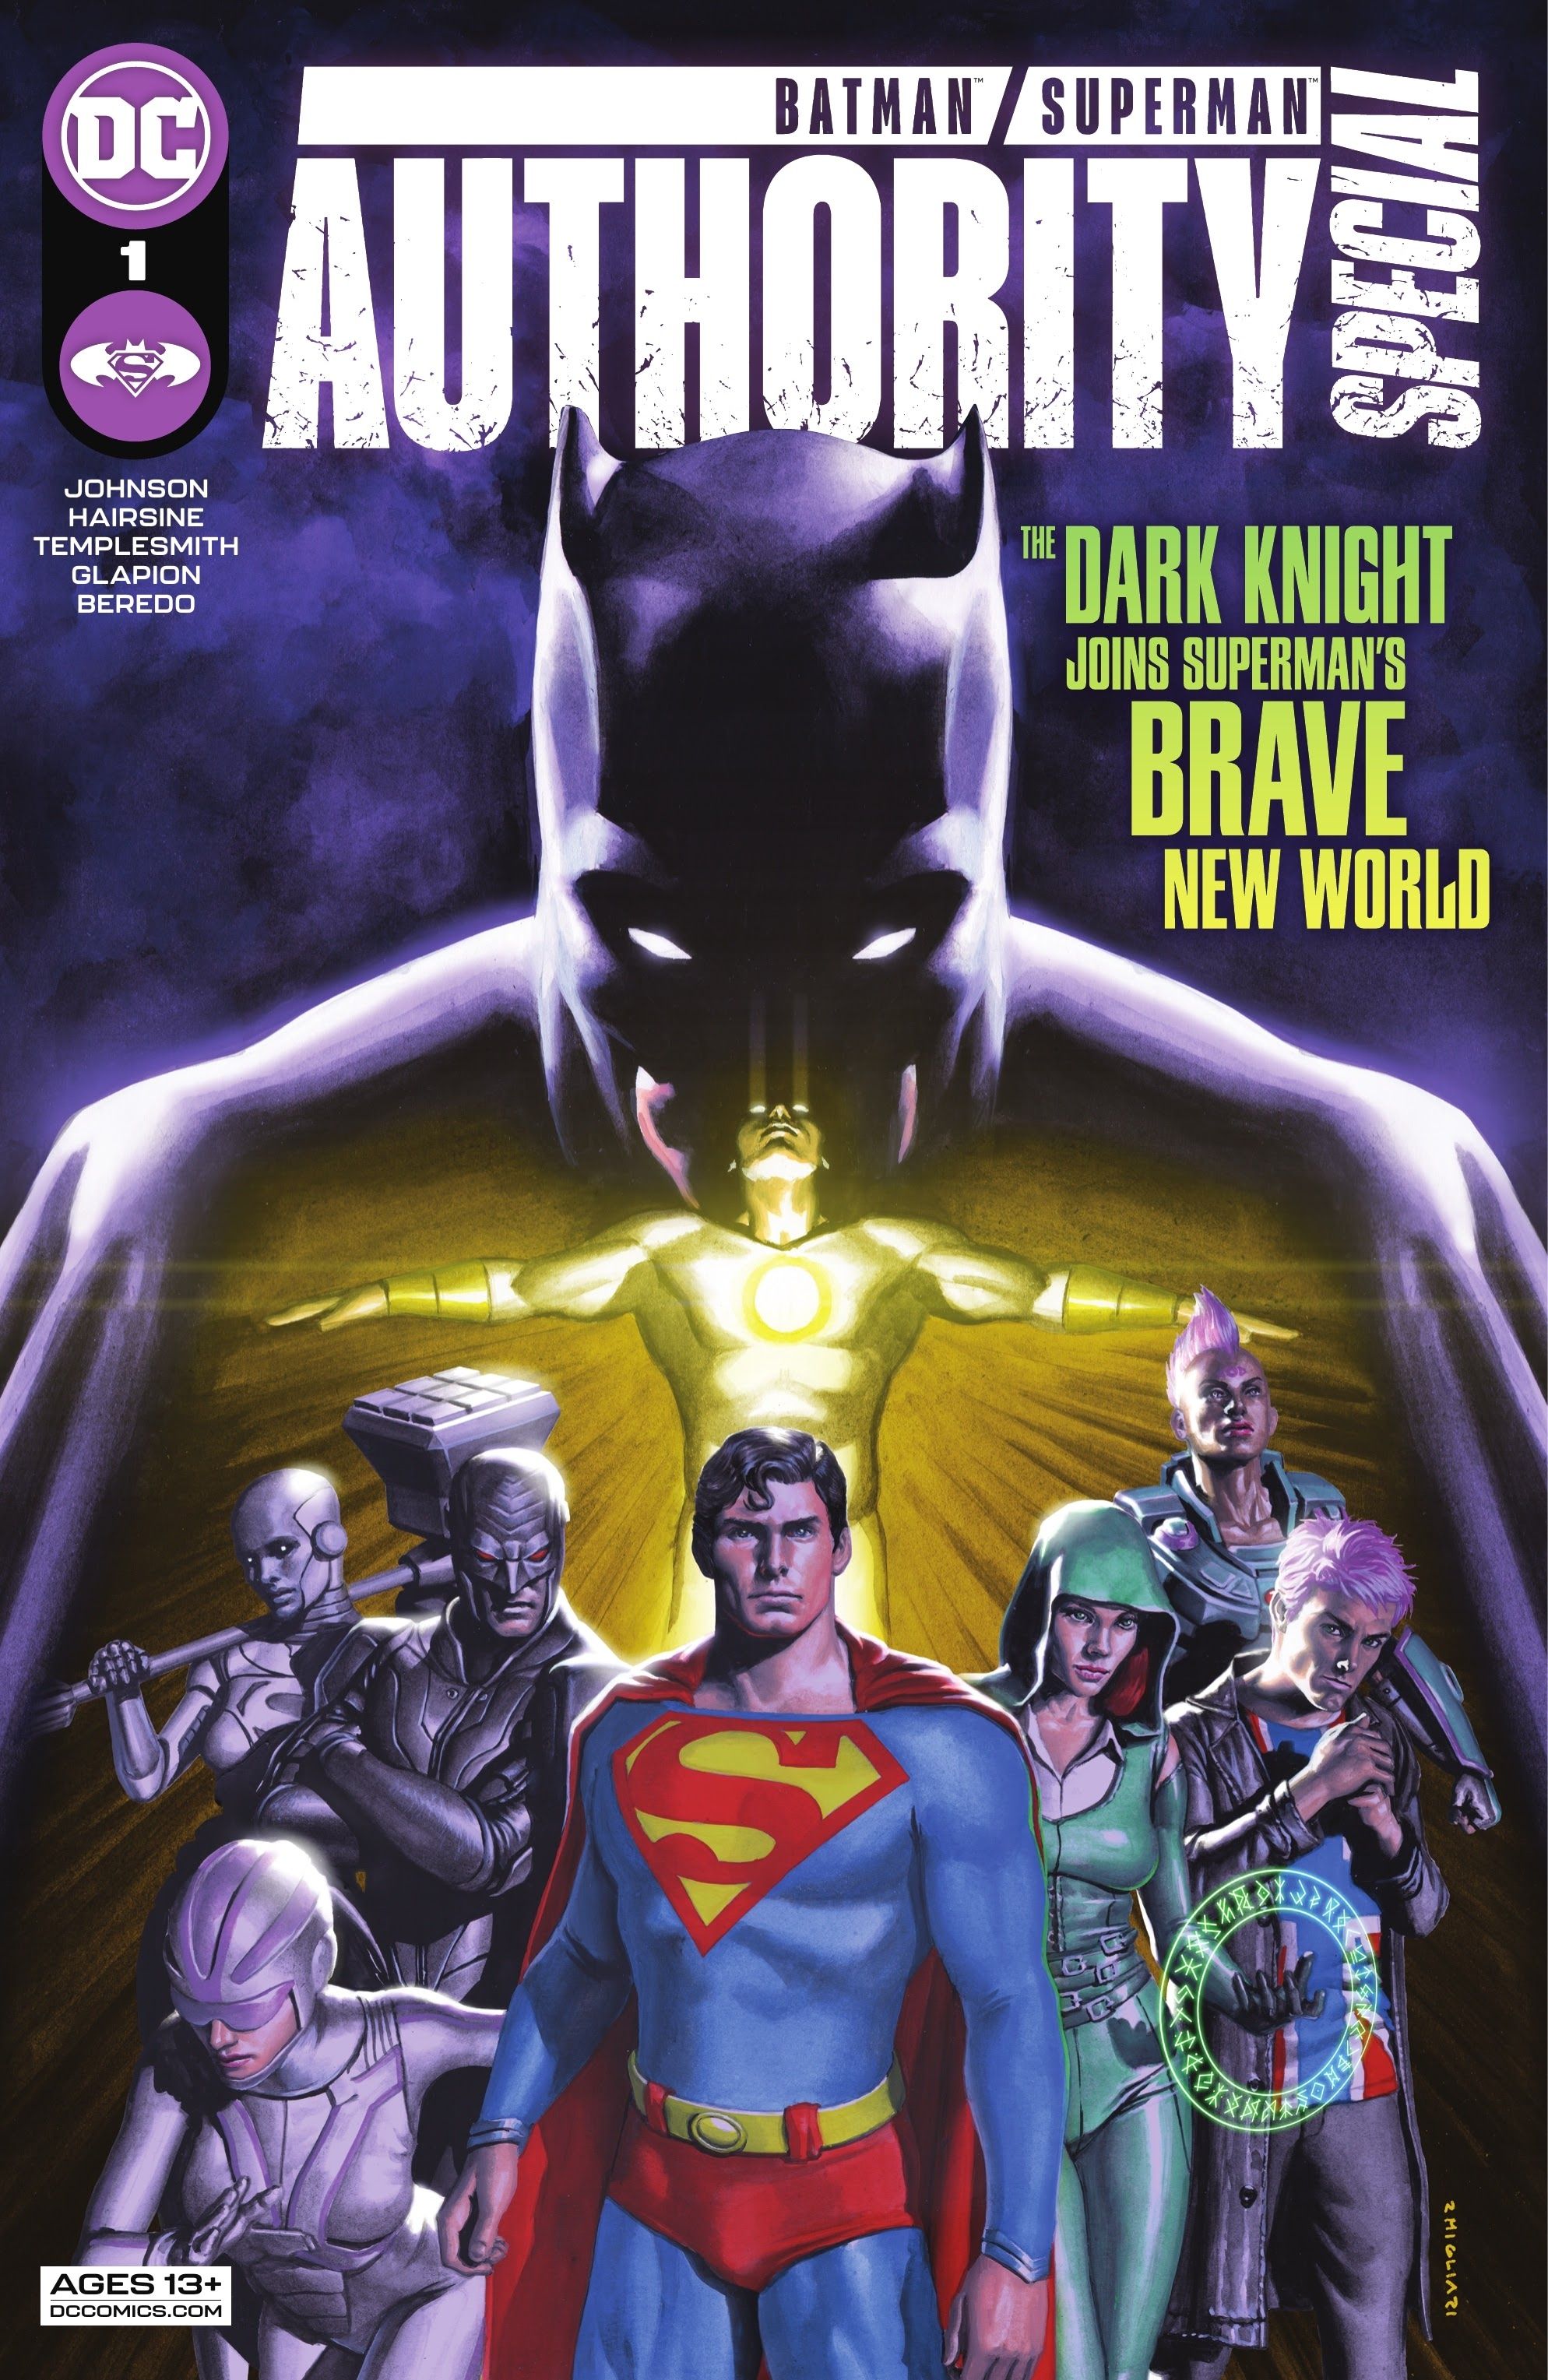 DC's Batman & Superman Team Up to Take on the Dark Multiverse